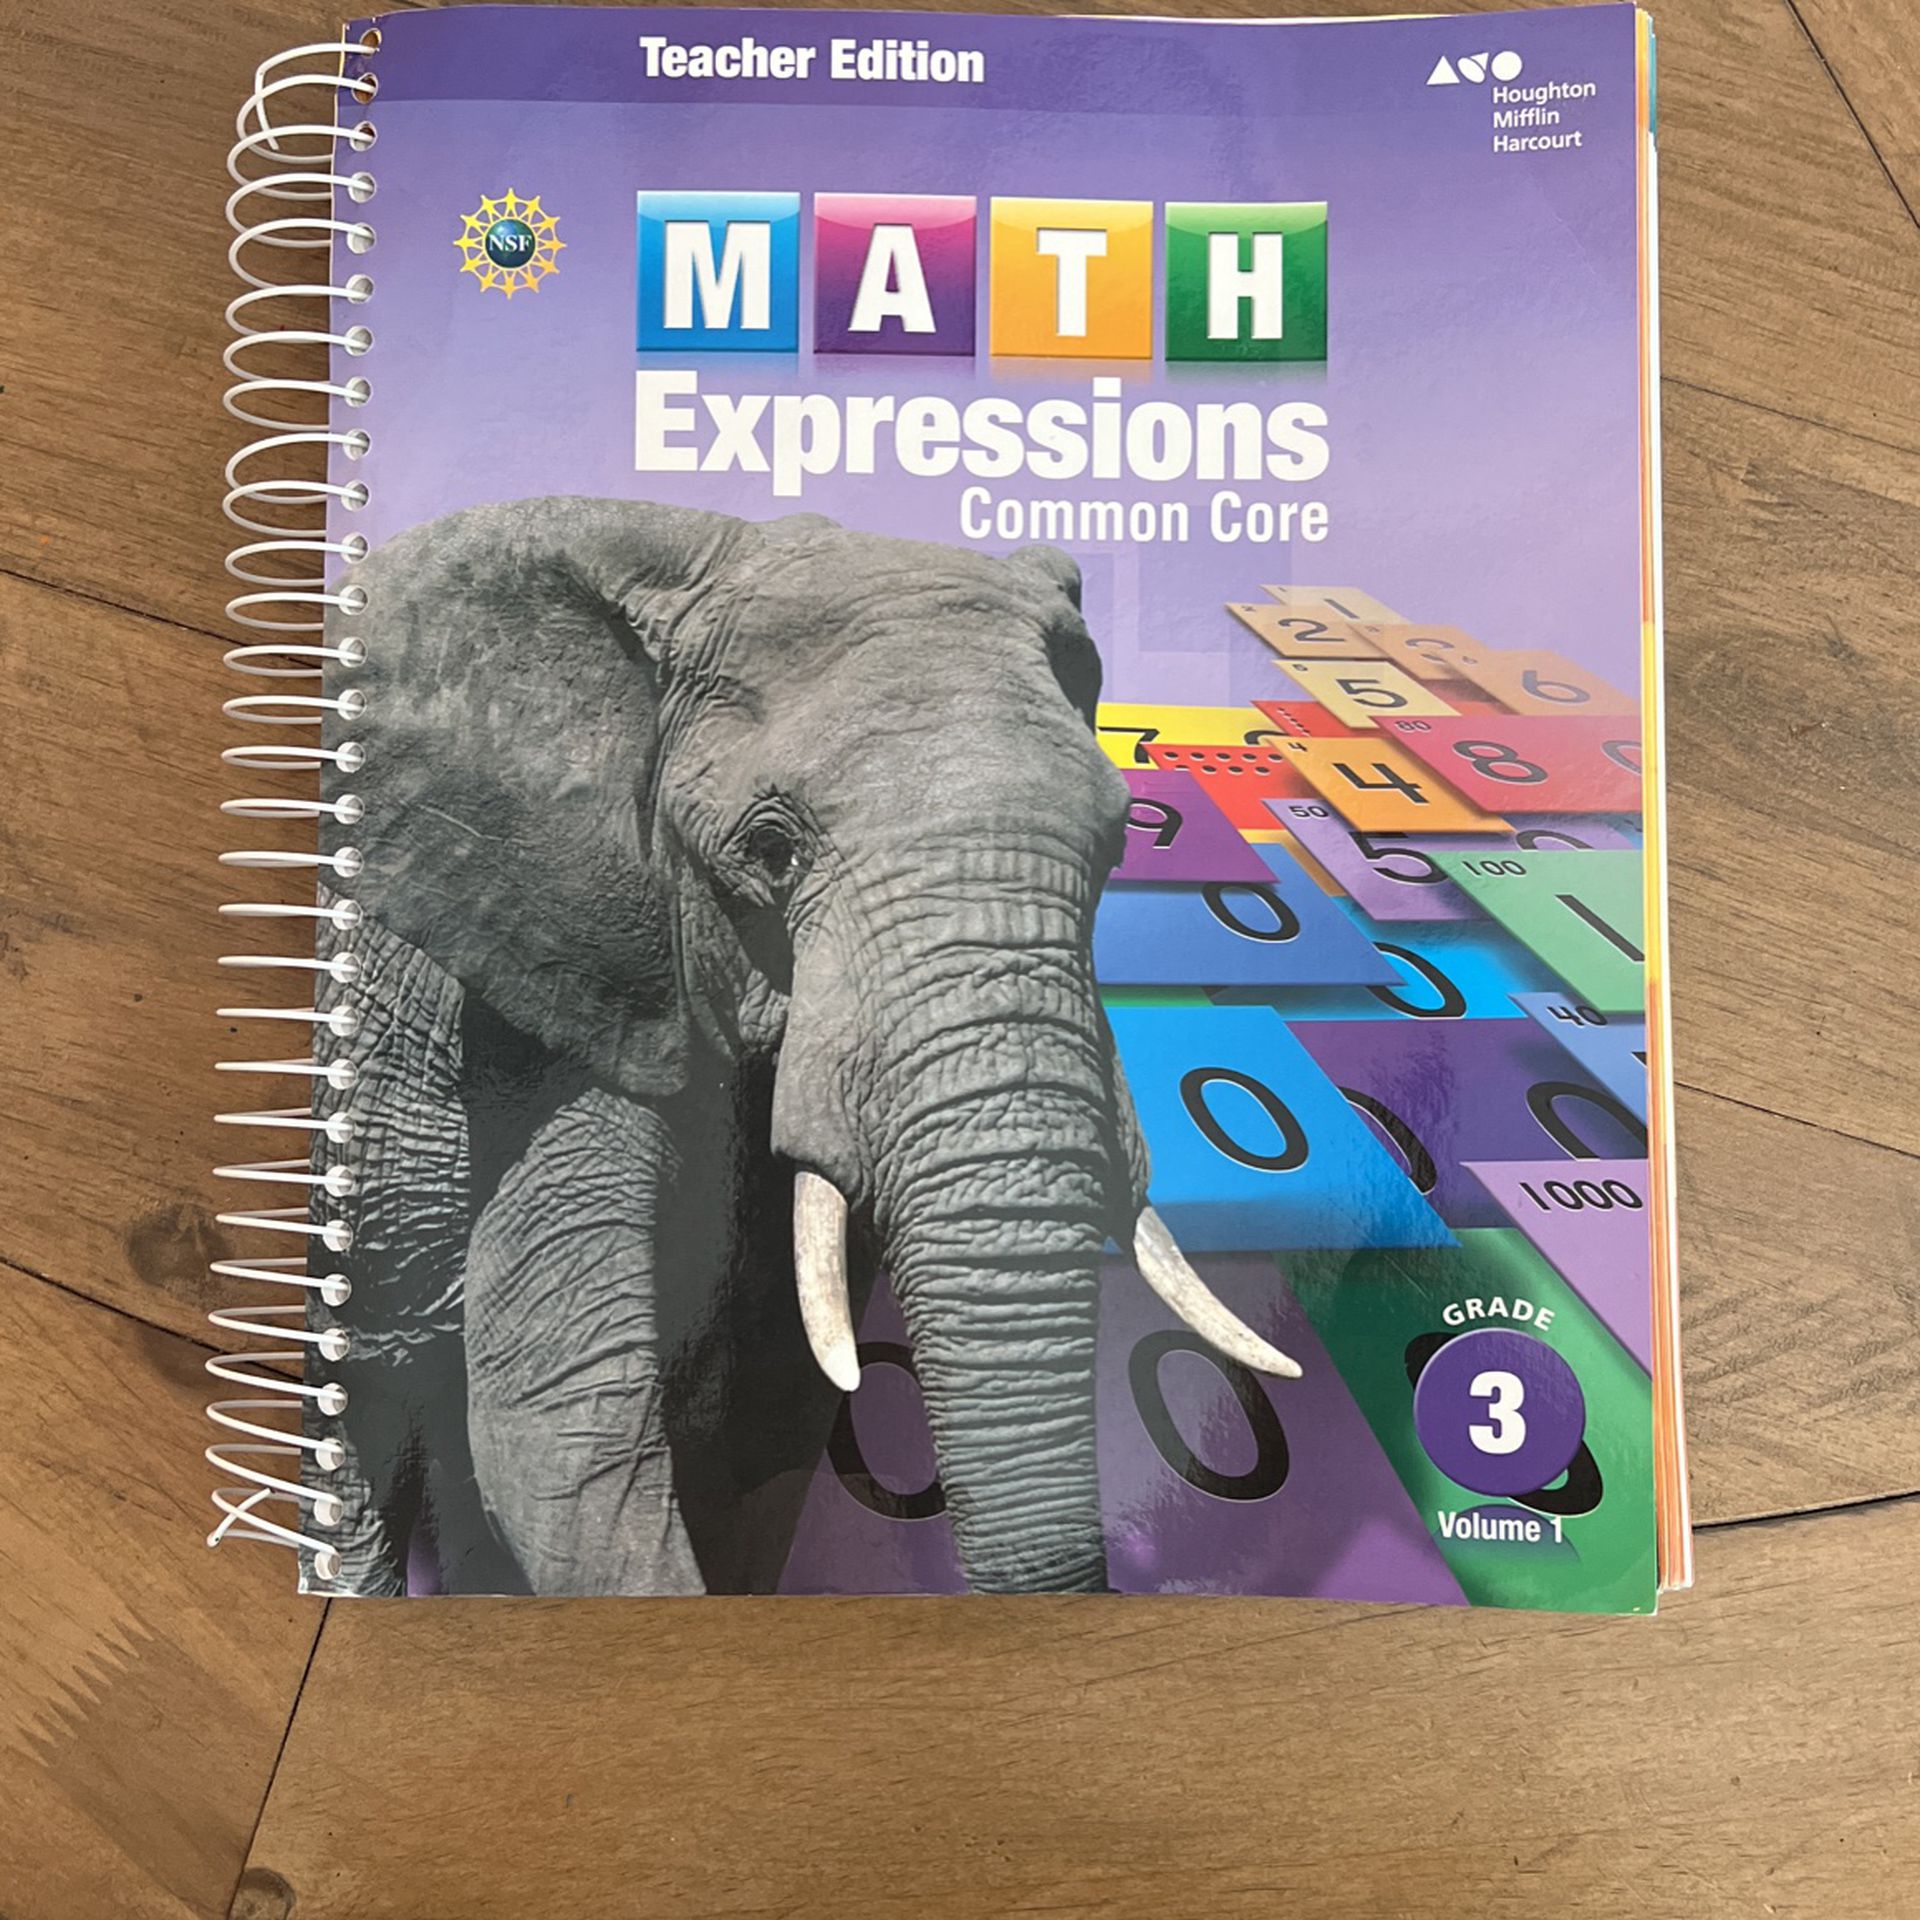 Common　CA　Expressions　Teacher　OfferUp　Edition　Sale　Yorba　in　Grade　Volume　for　Linda,　Math　Core